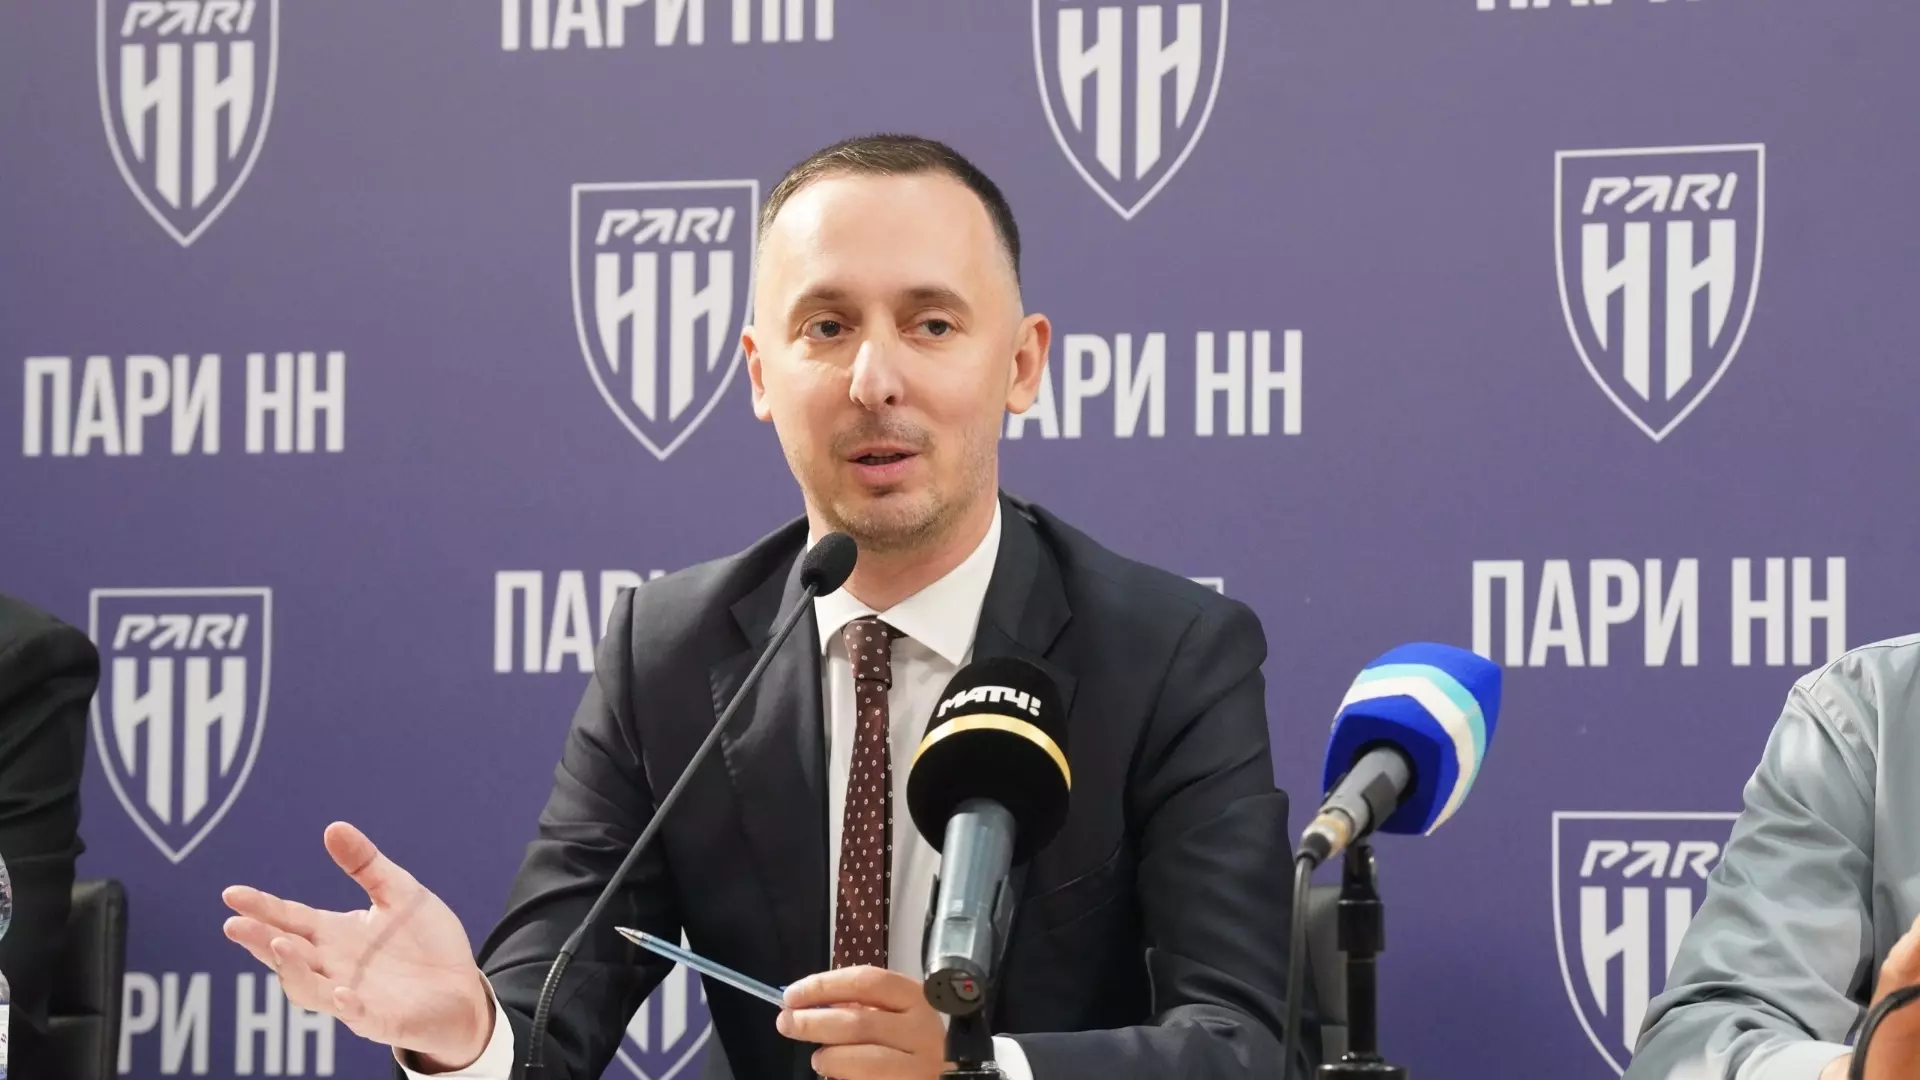 Глава ФК «Пари НН» назвал Юрана лучшим тренером в сезоне РПЛ